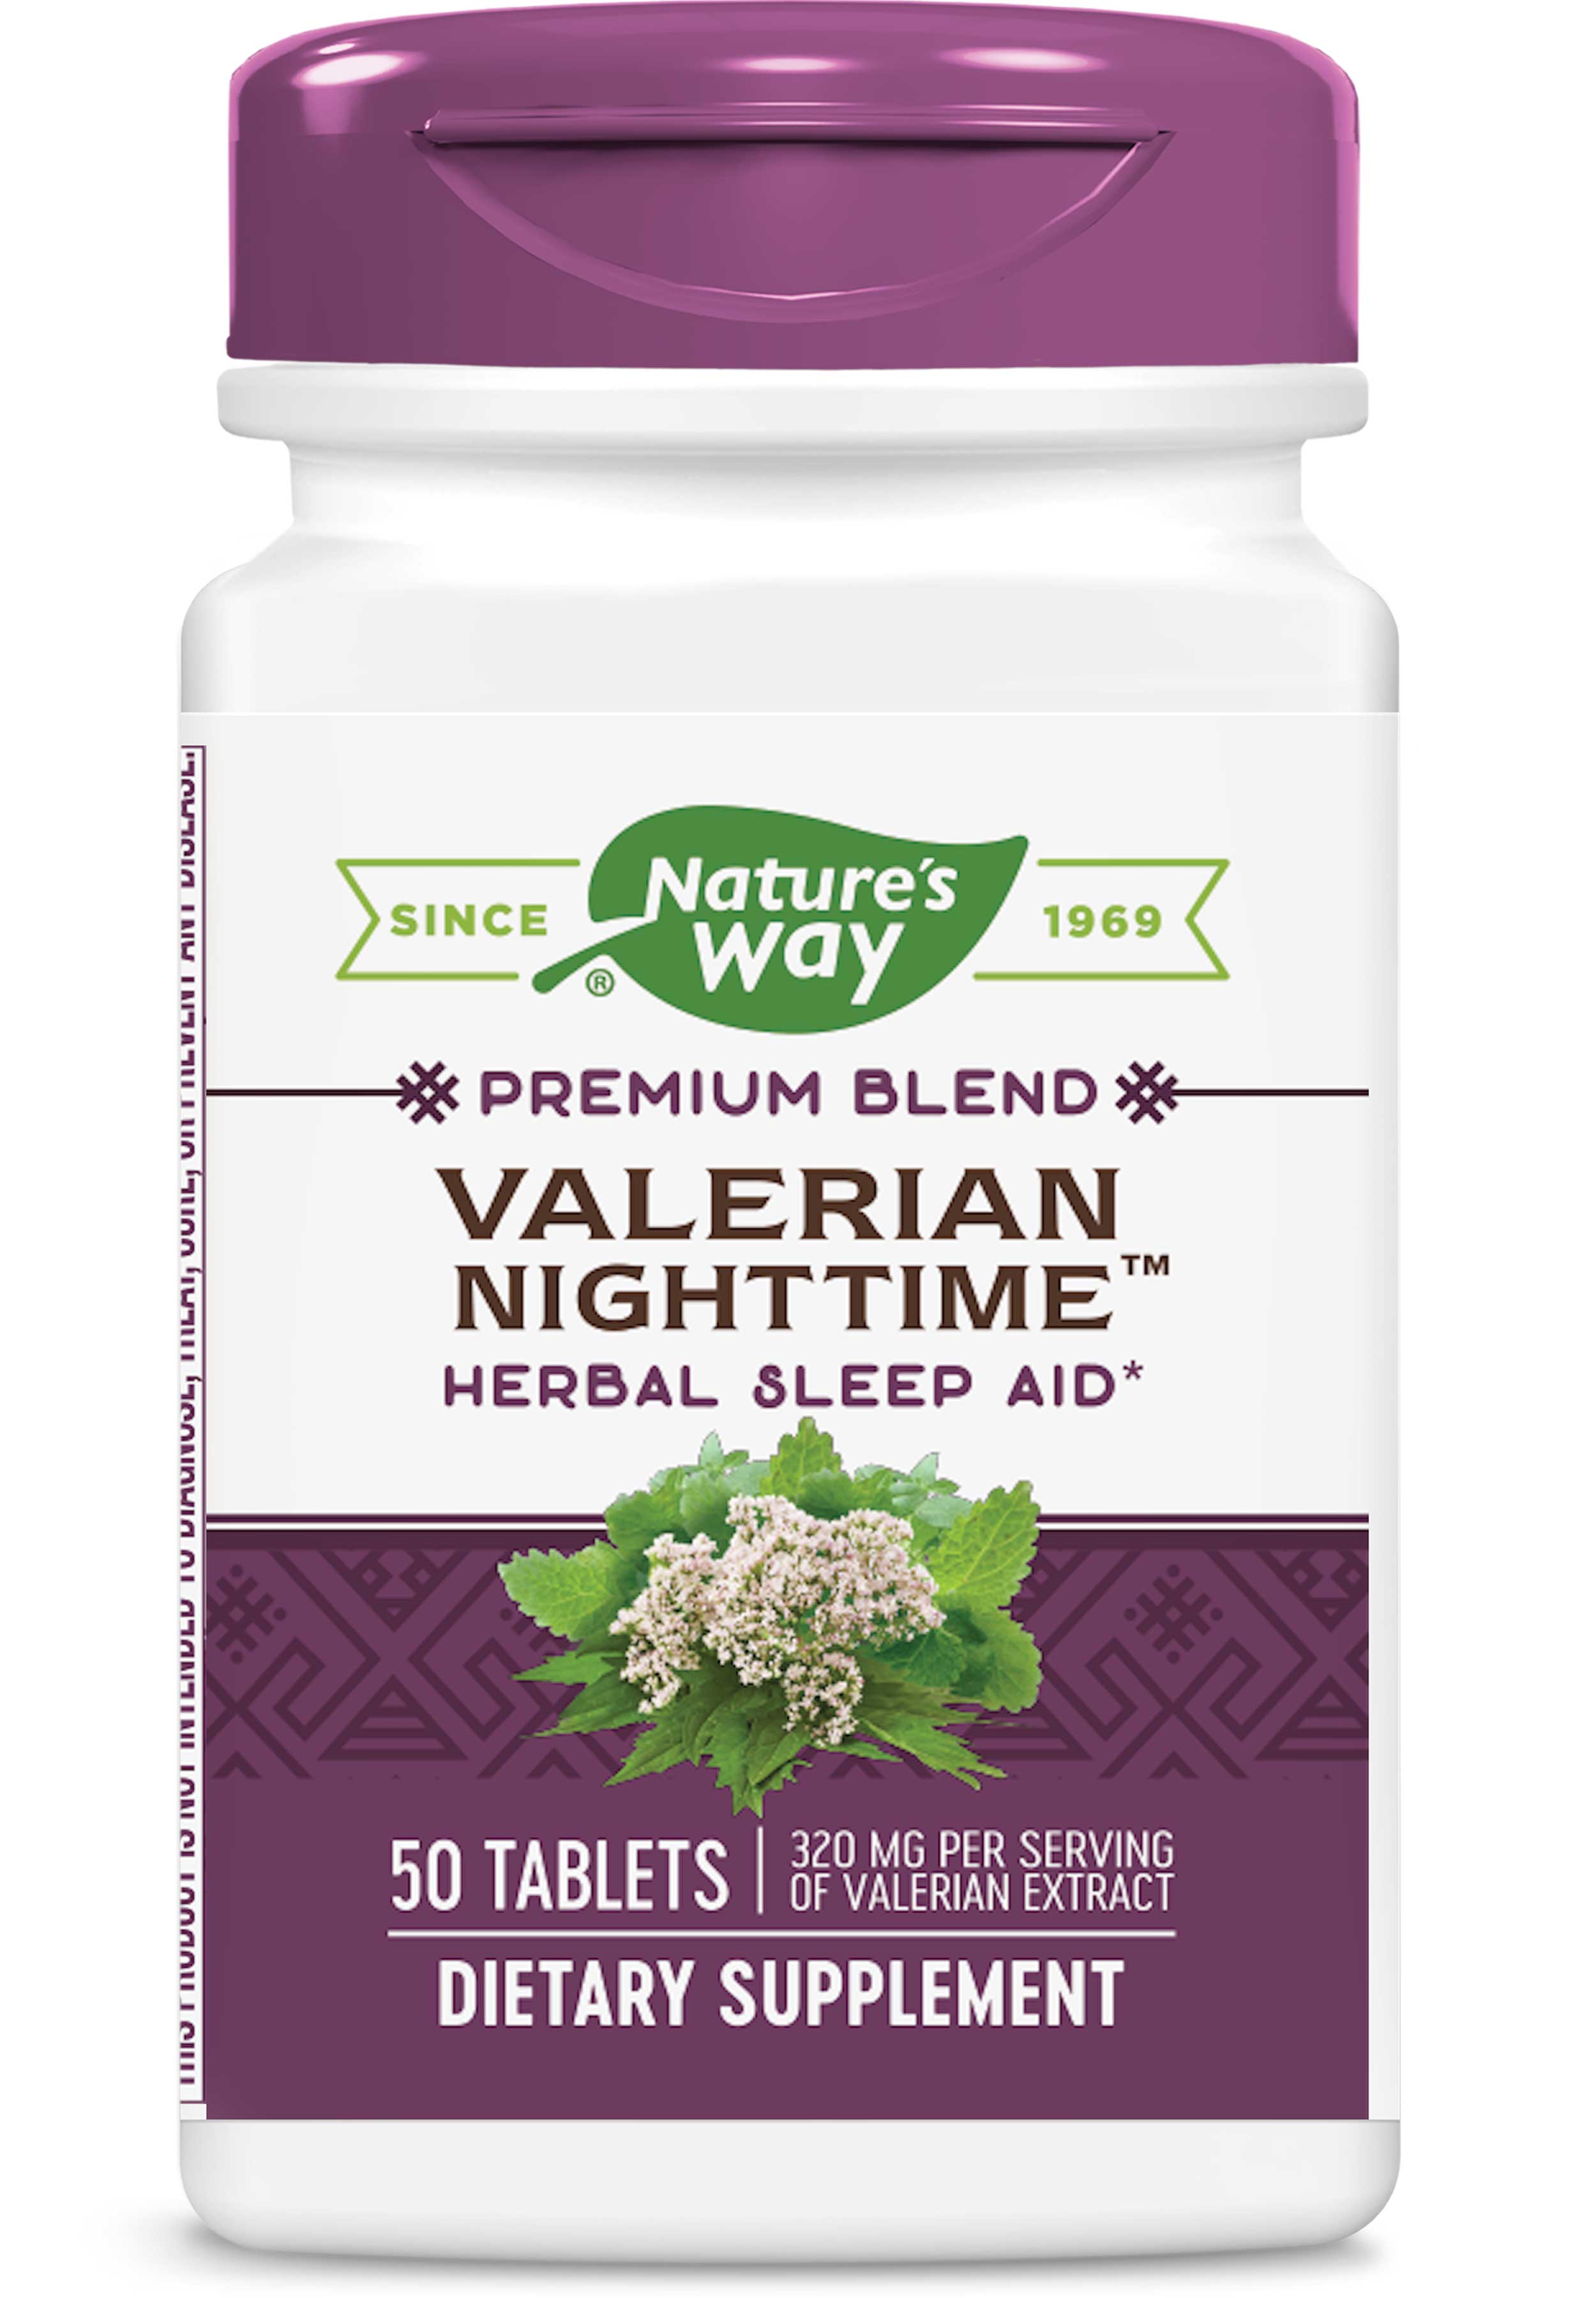 Nature's Way Valerian Nighttime Herbal Sleep Aid Premium Blend